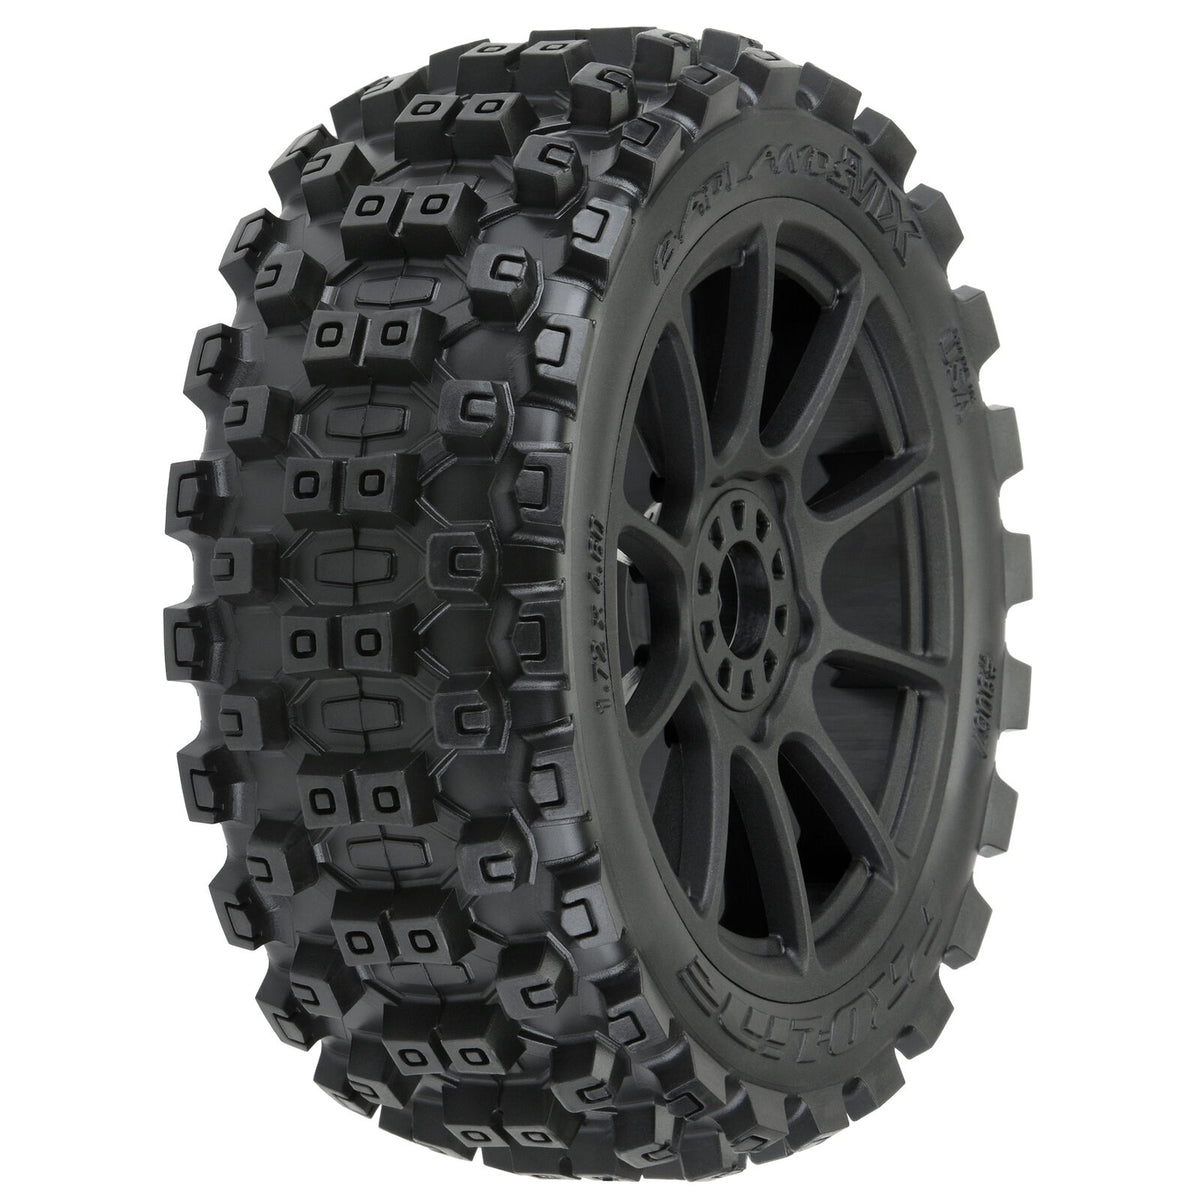 1/8 Badlands MX M2 F/R Buggy Tires Mounted 17mm Black Mach 10 (2) - PRO906721